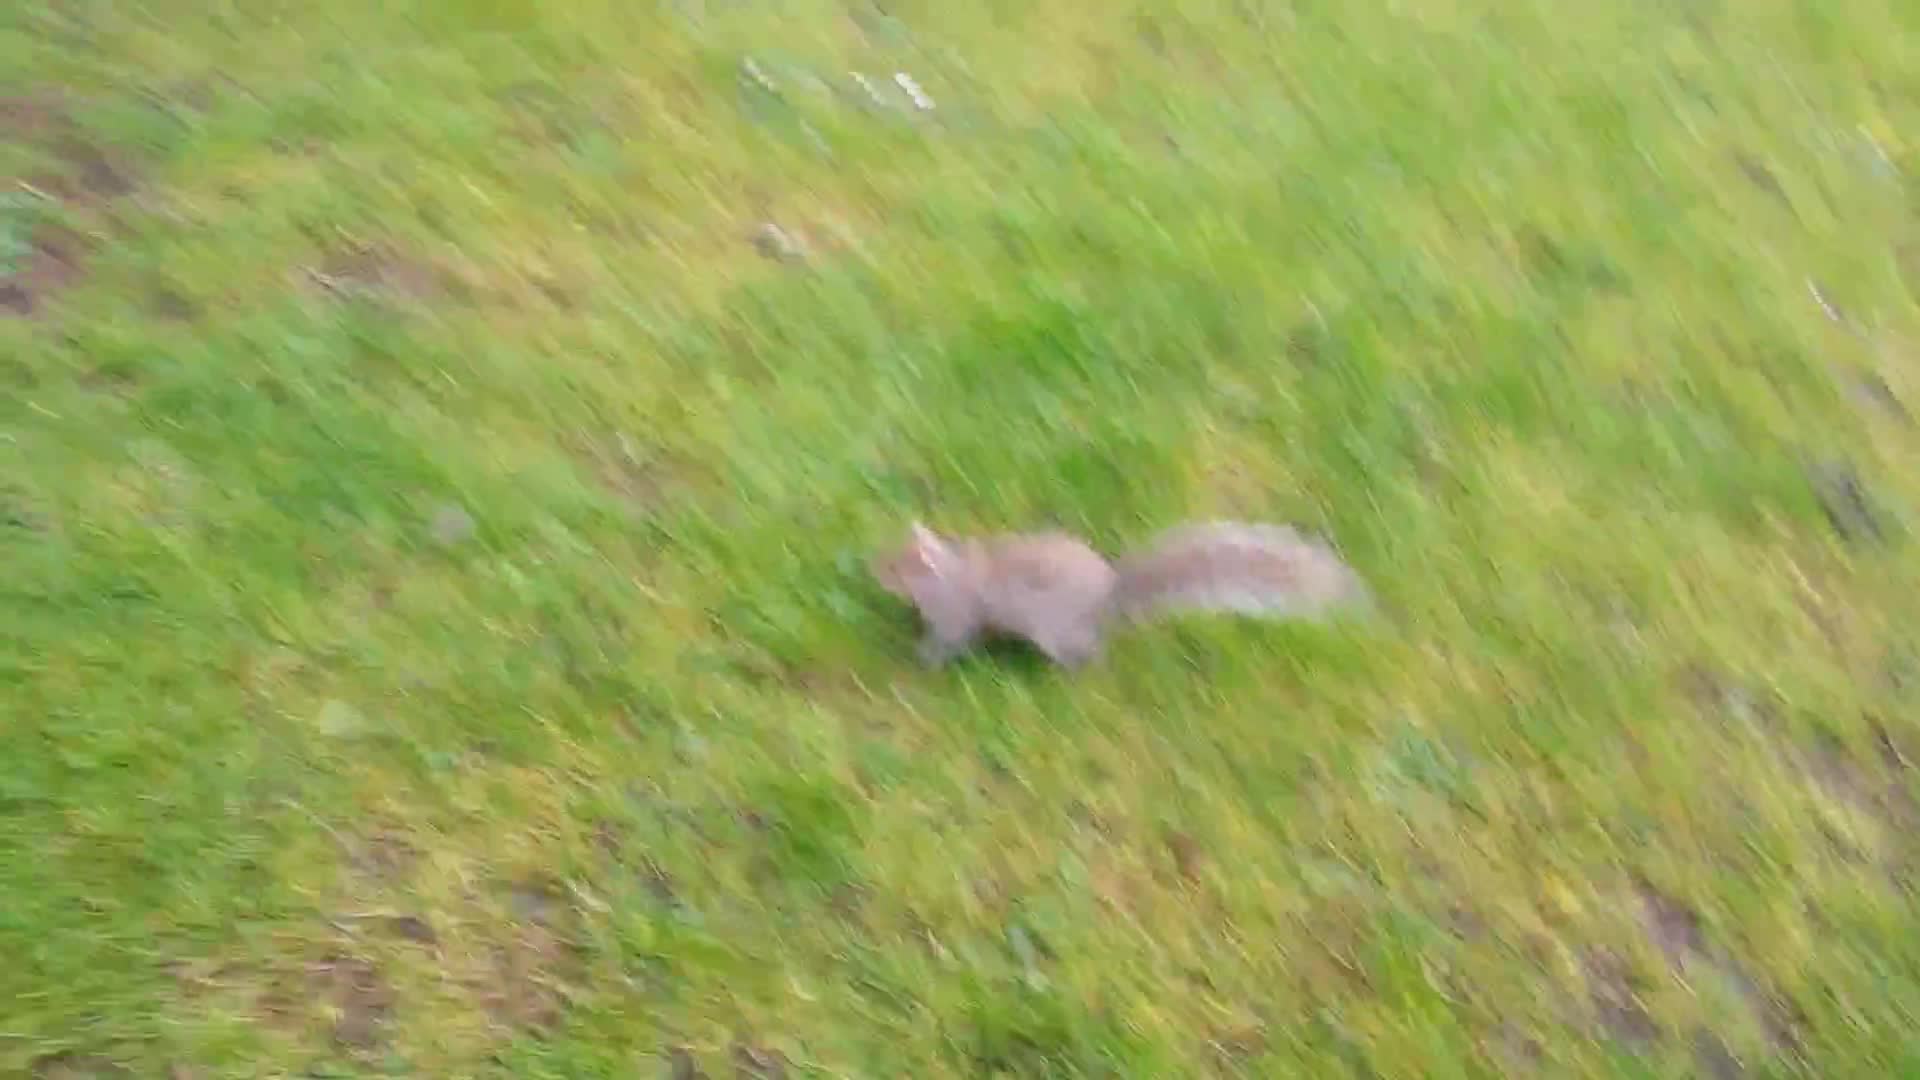 Friendly Squirrel and Ducks